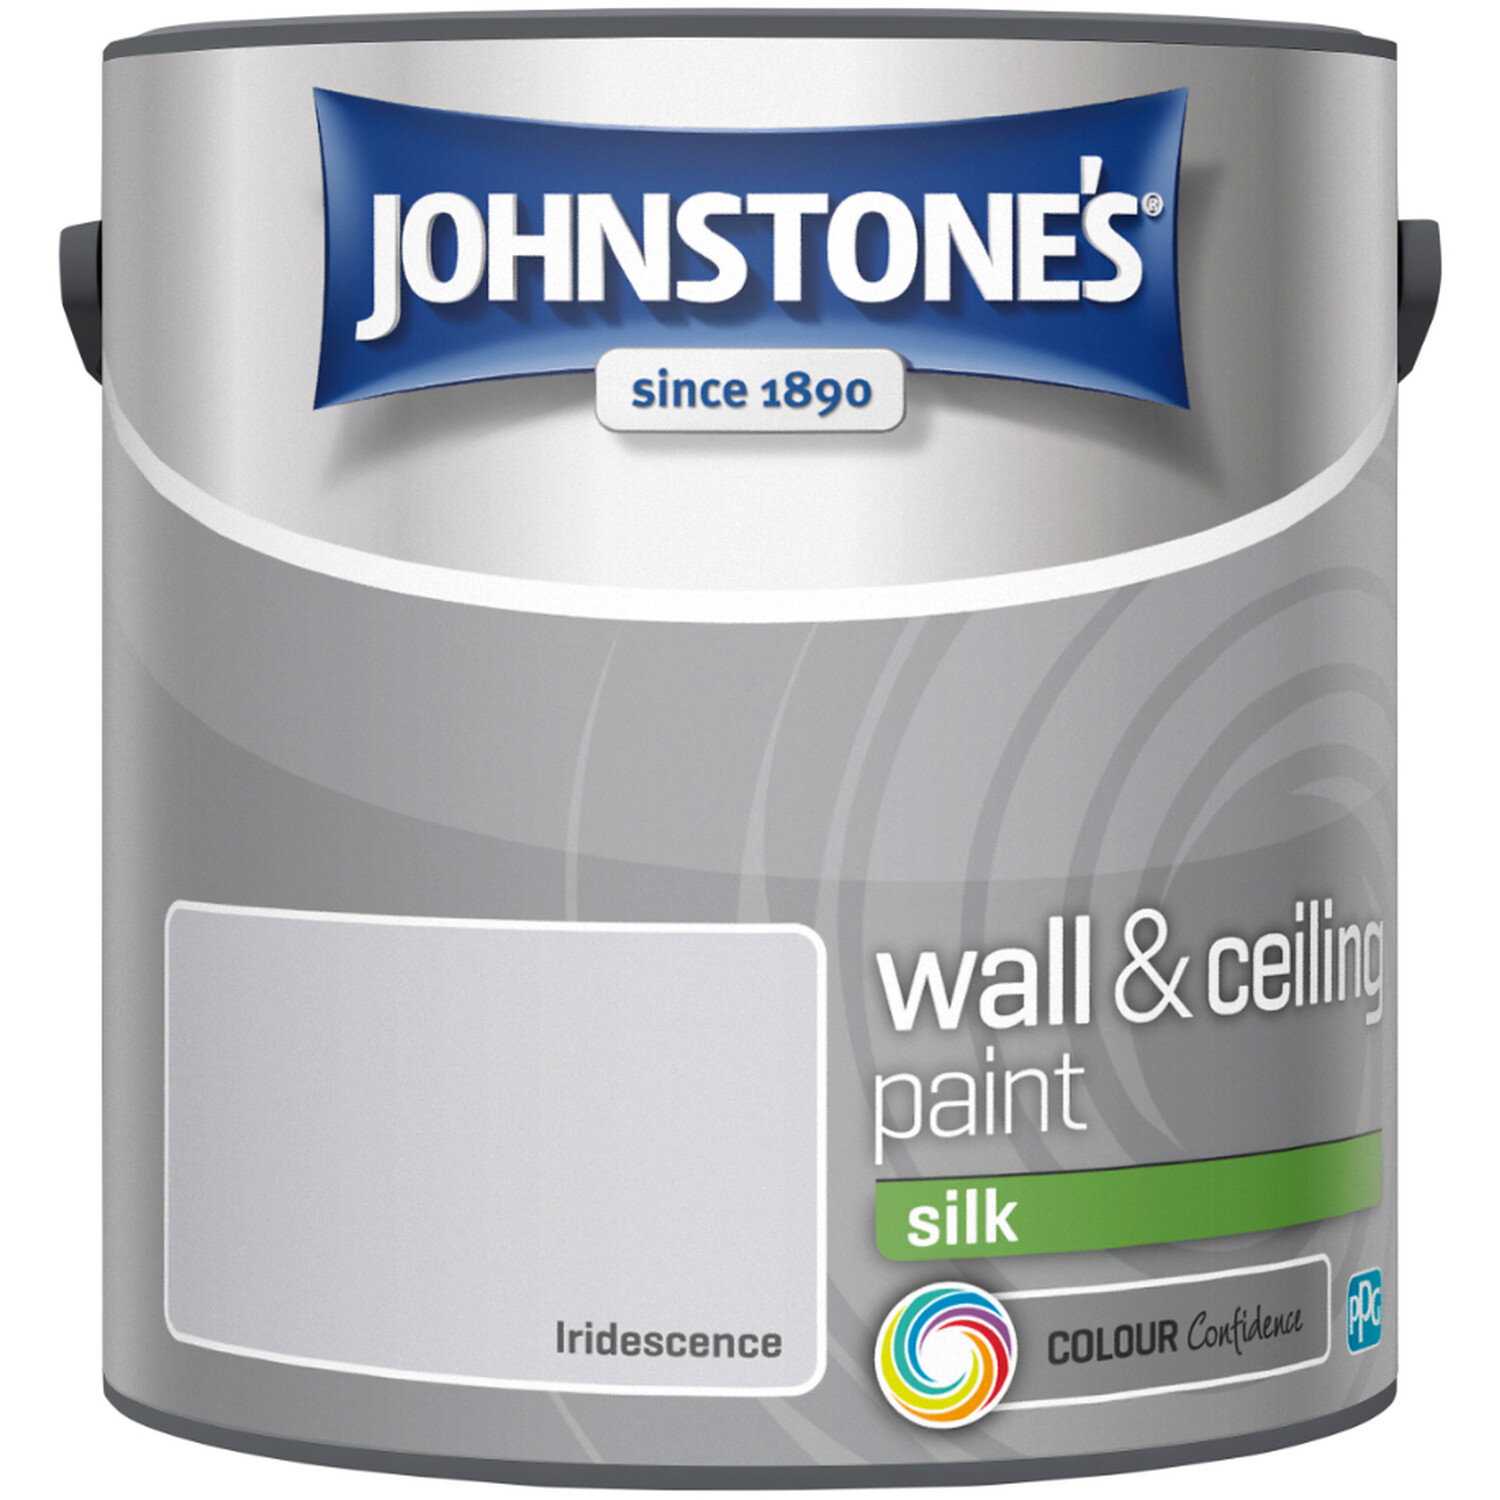 Johnstones Silk Emulsion Paint - Iridescence Image 2